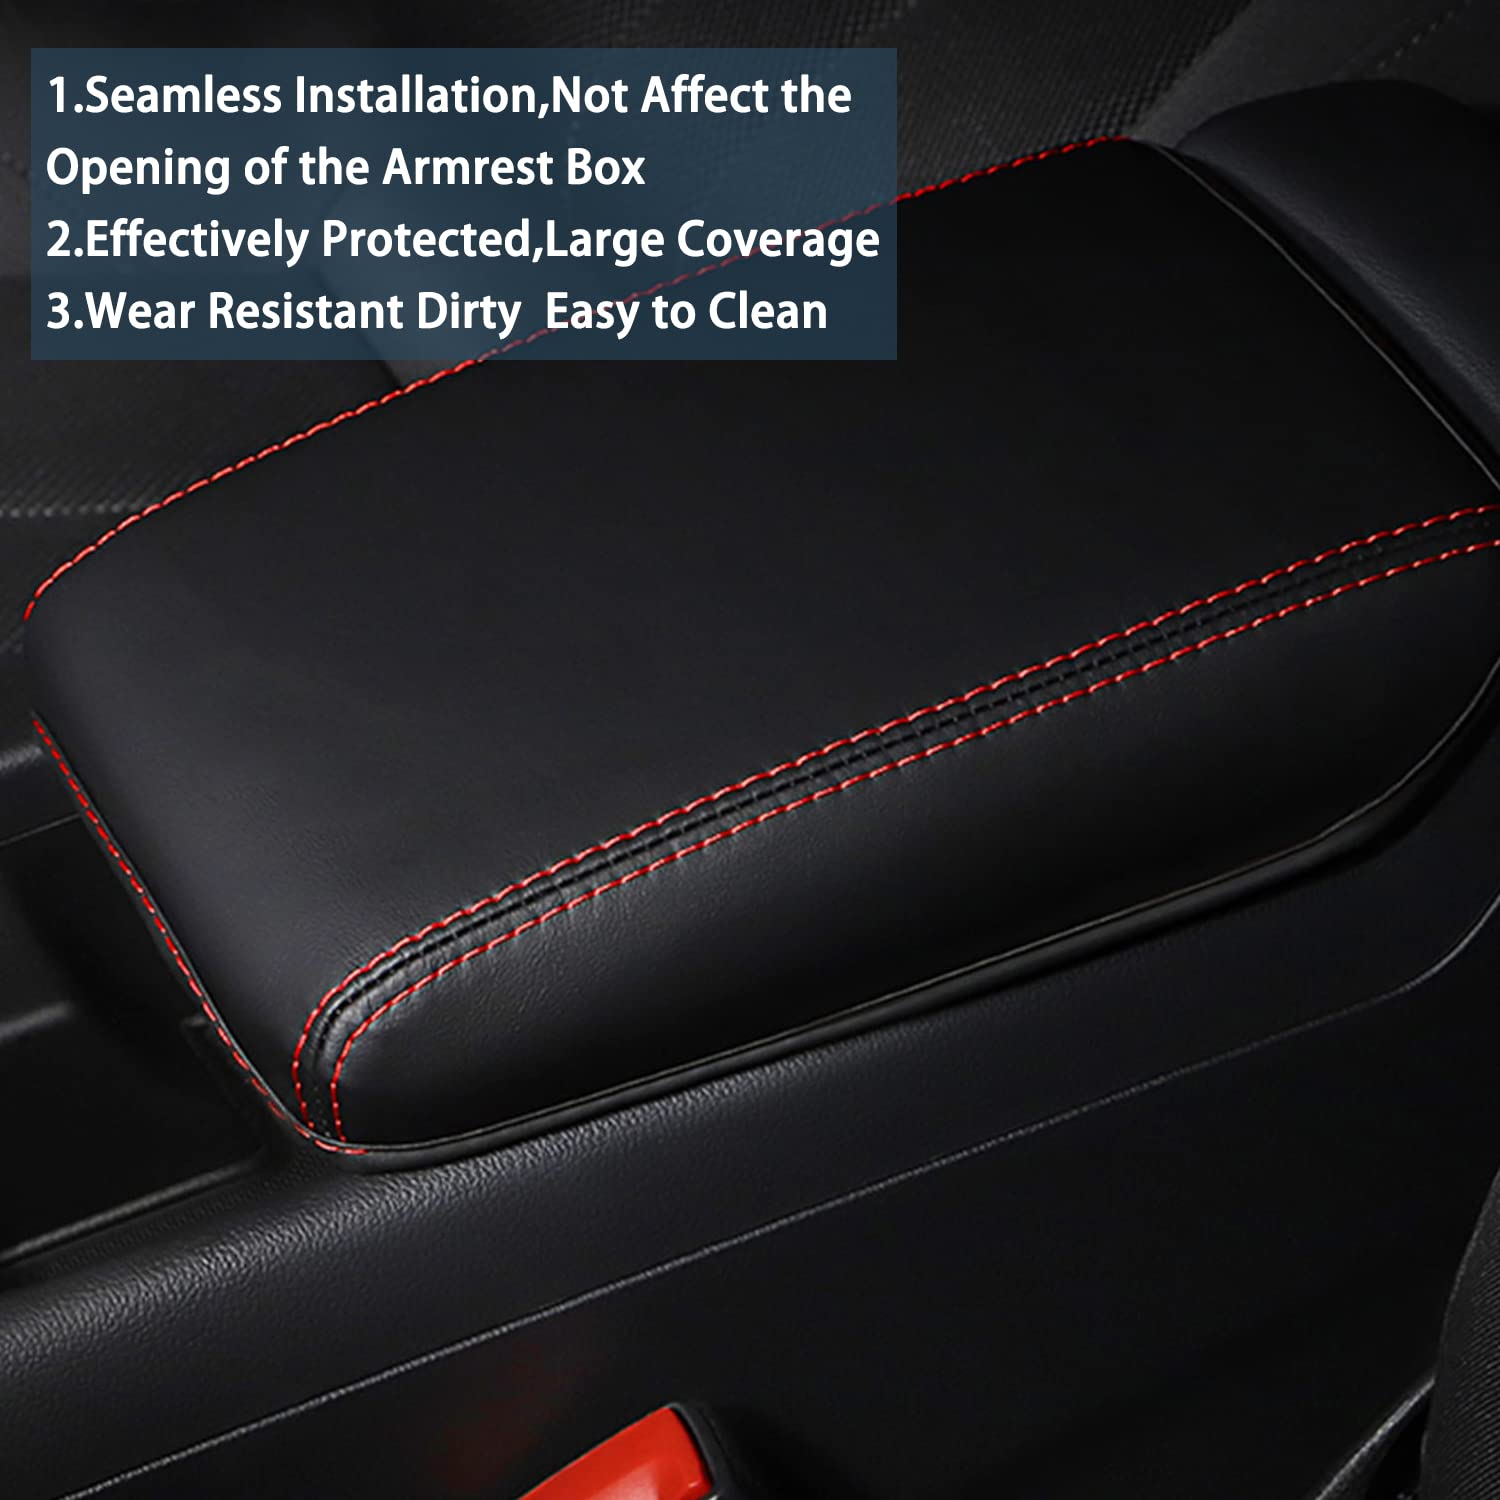 Audi A4 B9 8W Armrest Cover 2017+ - LFOTPP Car Accessories